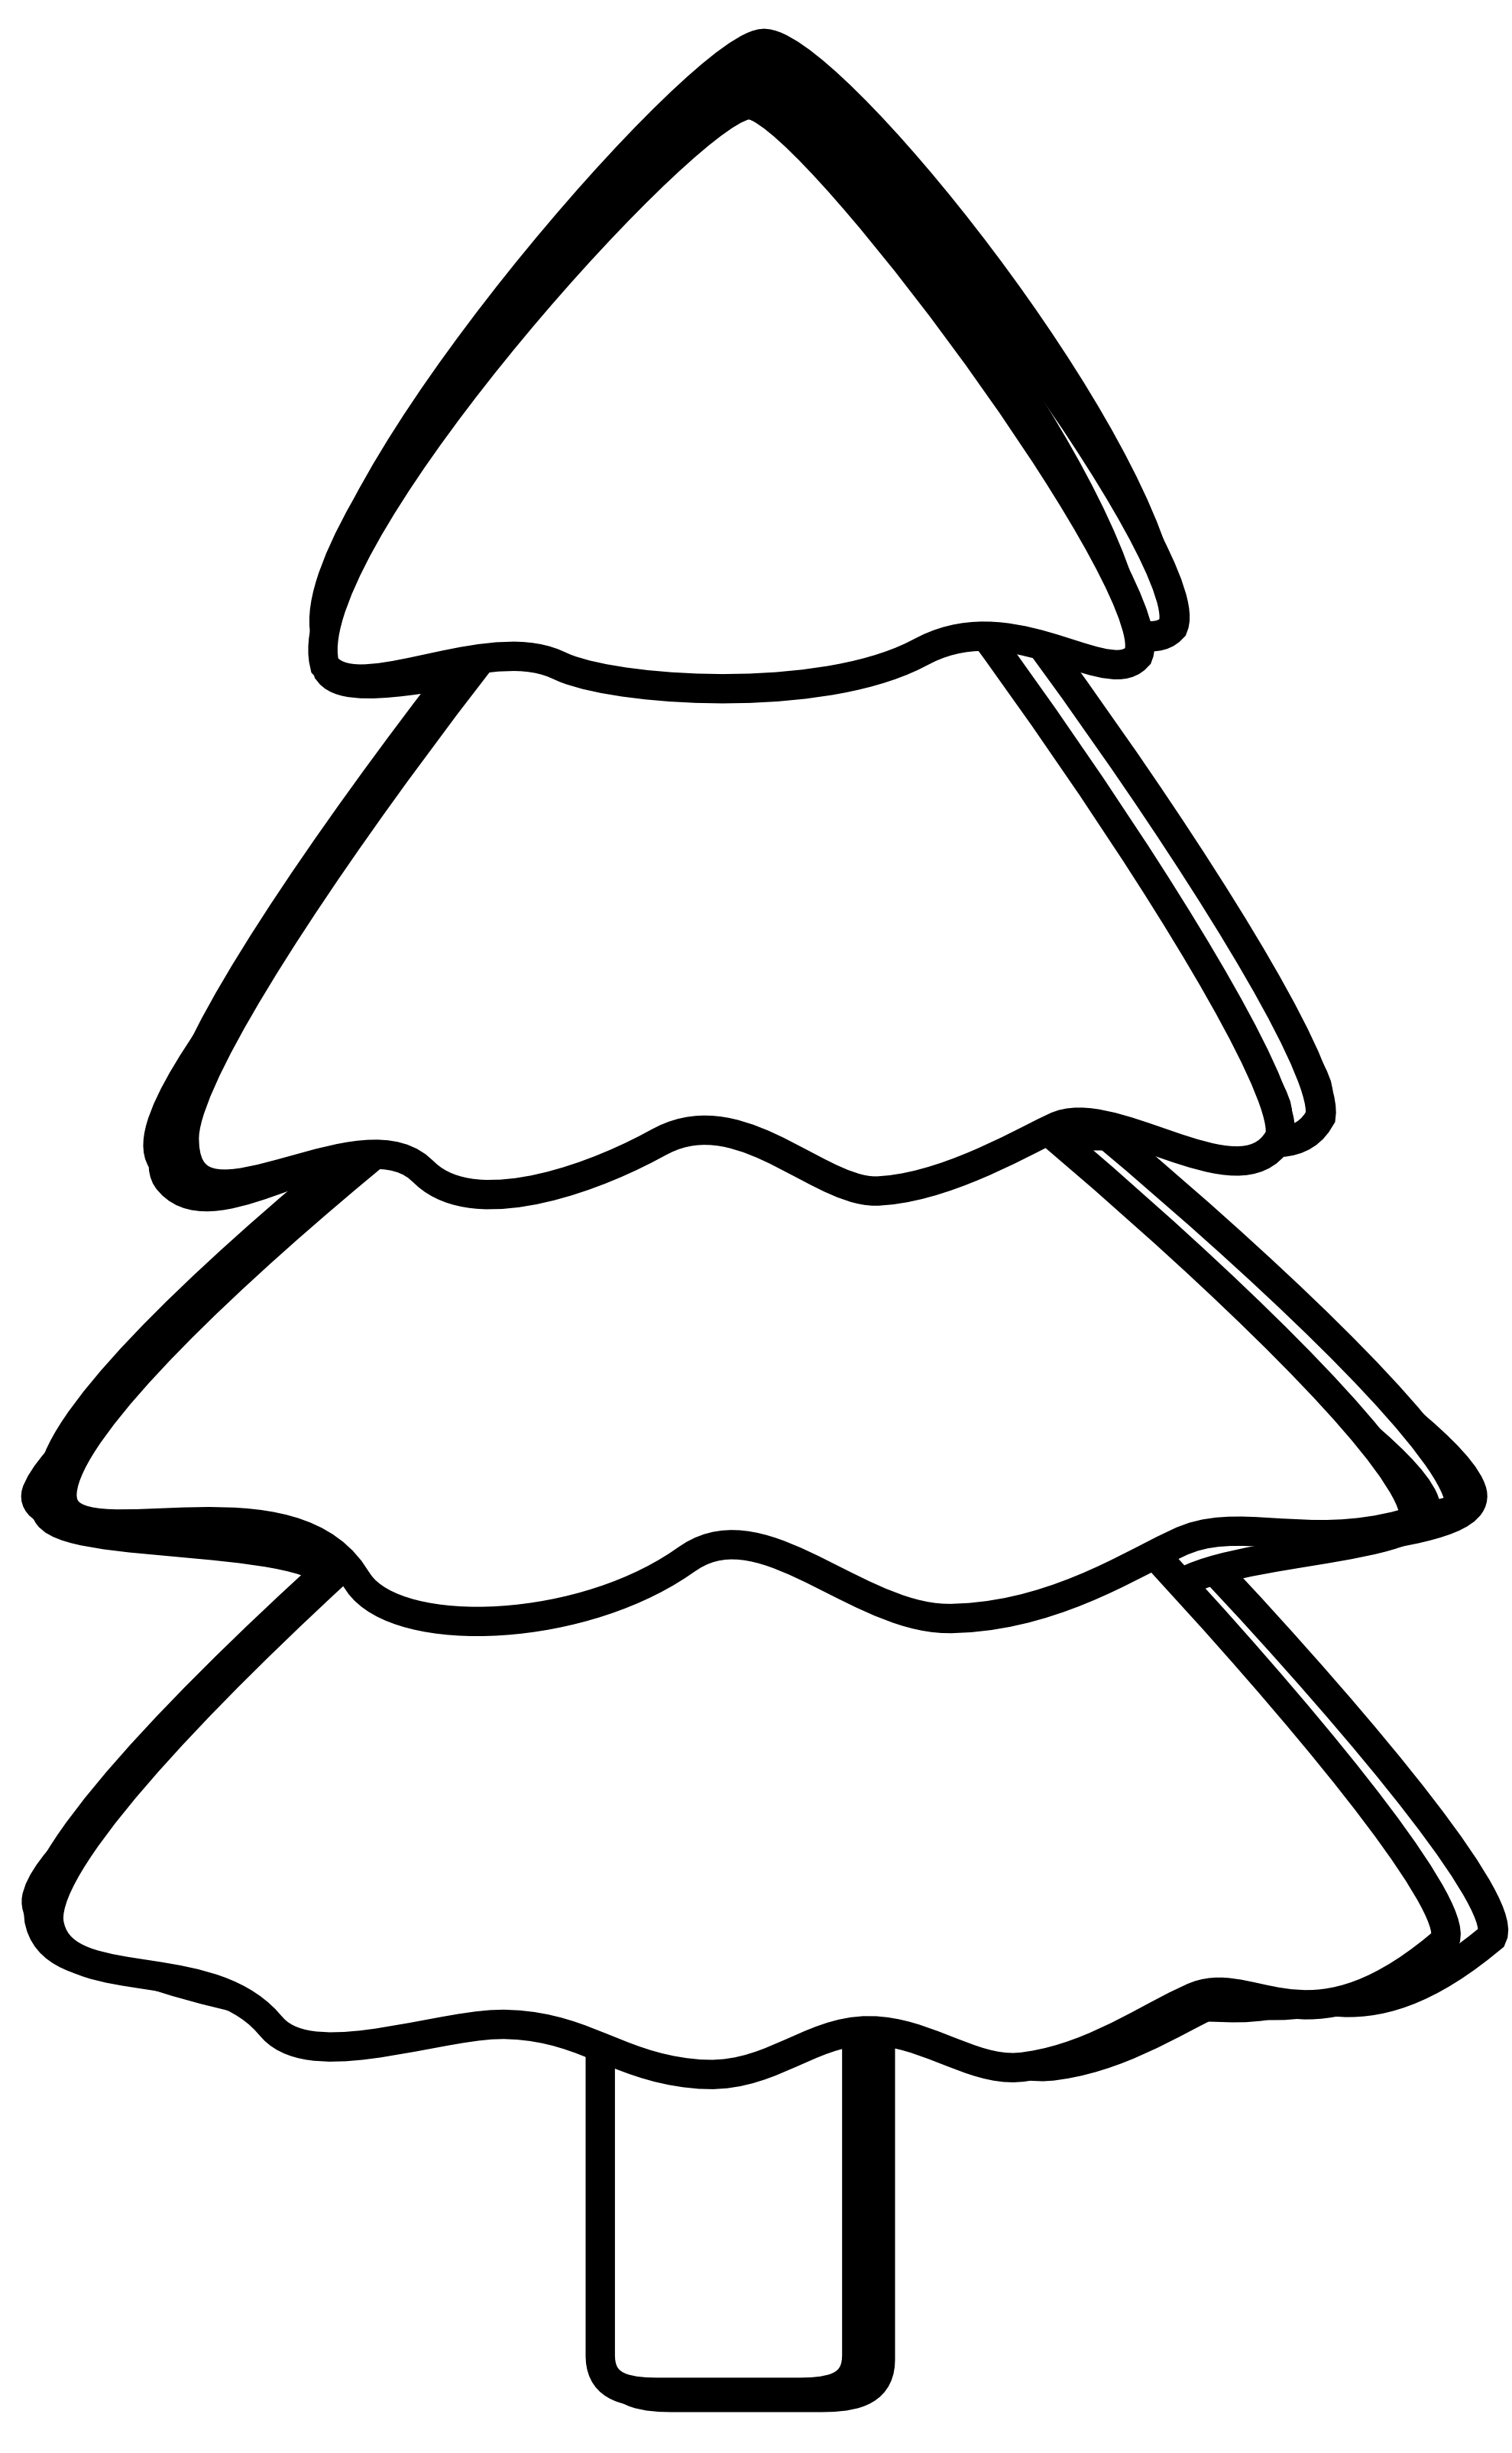 Plain christmas tree black and white clipart - ClipartFox